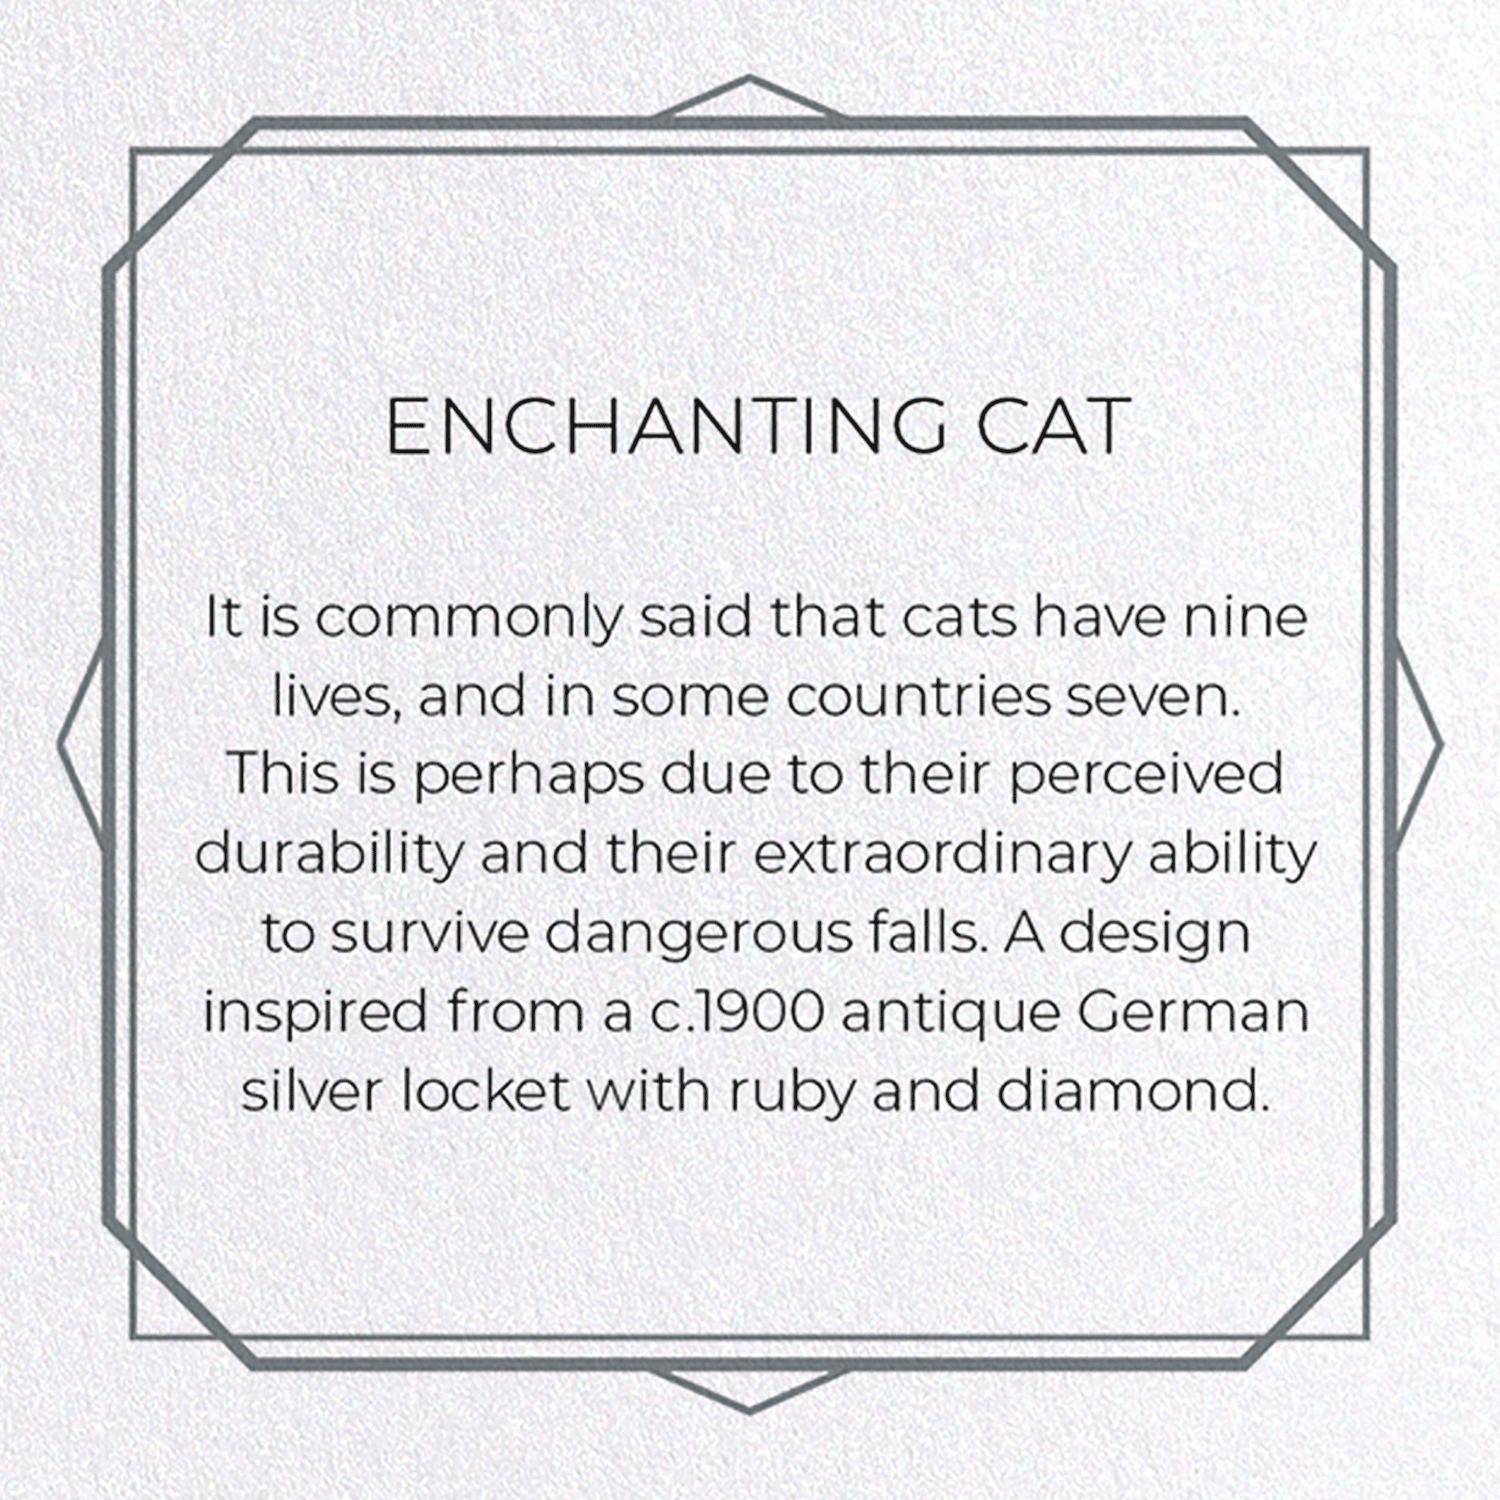 ENCHANTING CAT: Painting Greeting Card